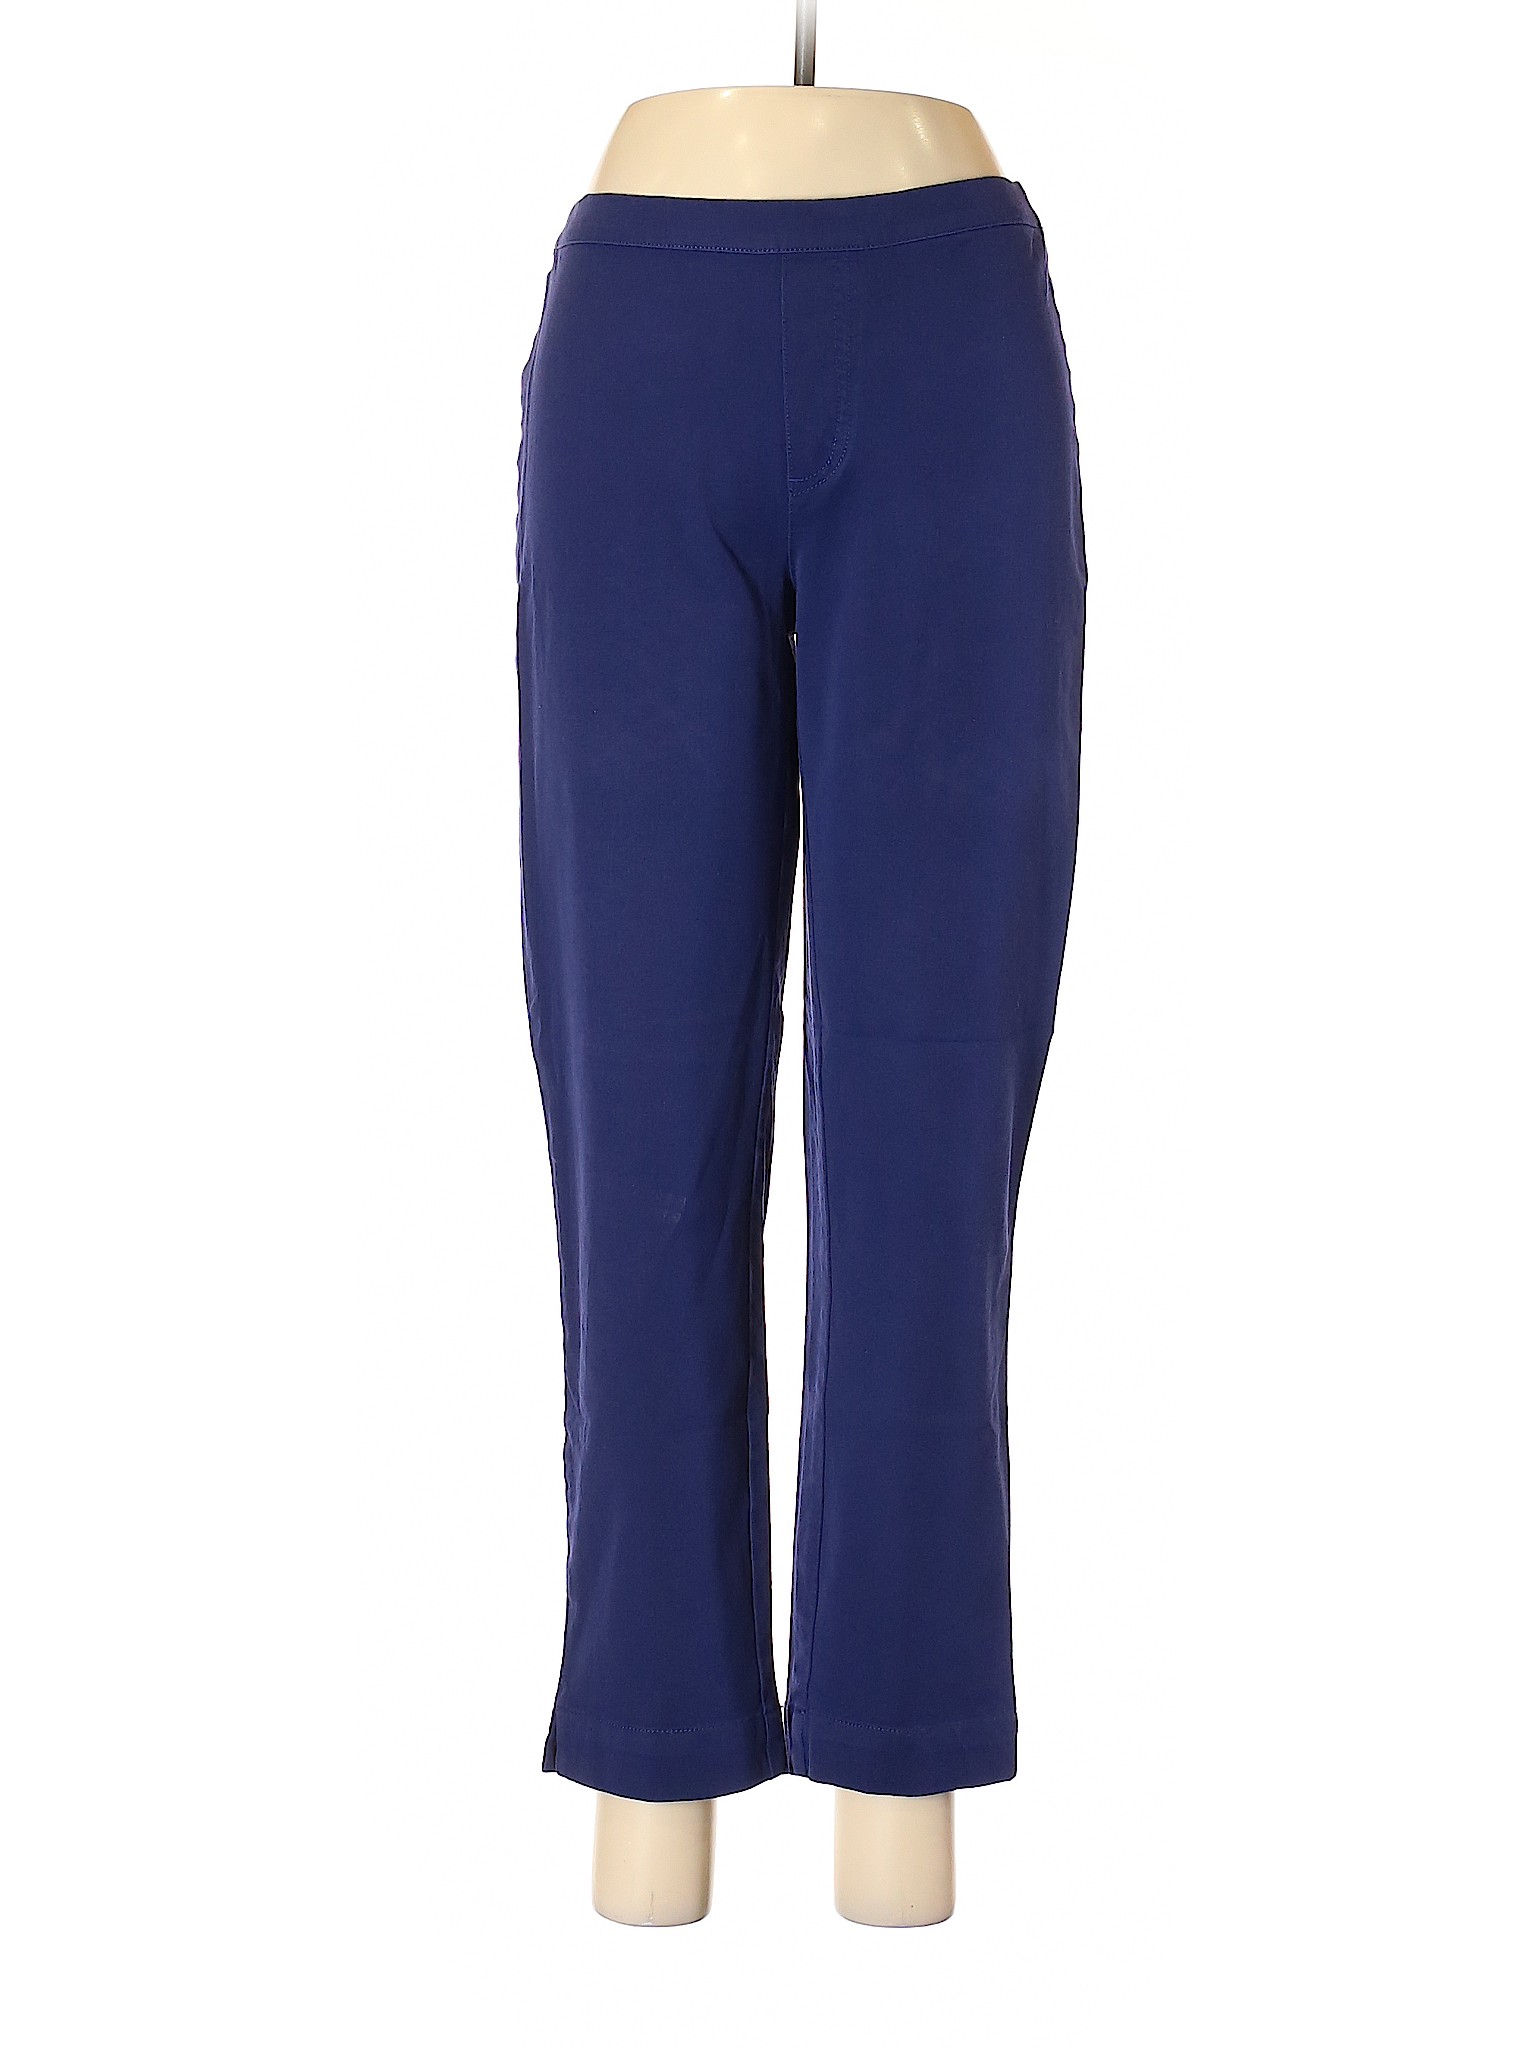 Isaac Mizrahi Women Blue Dress Pants 8 | eBay